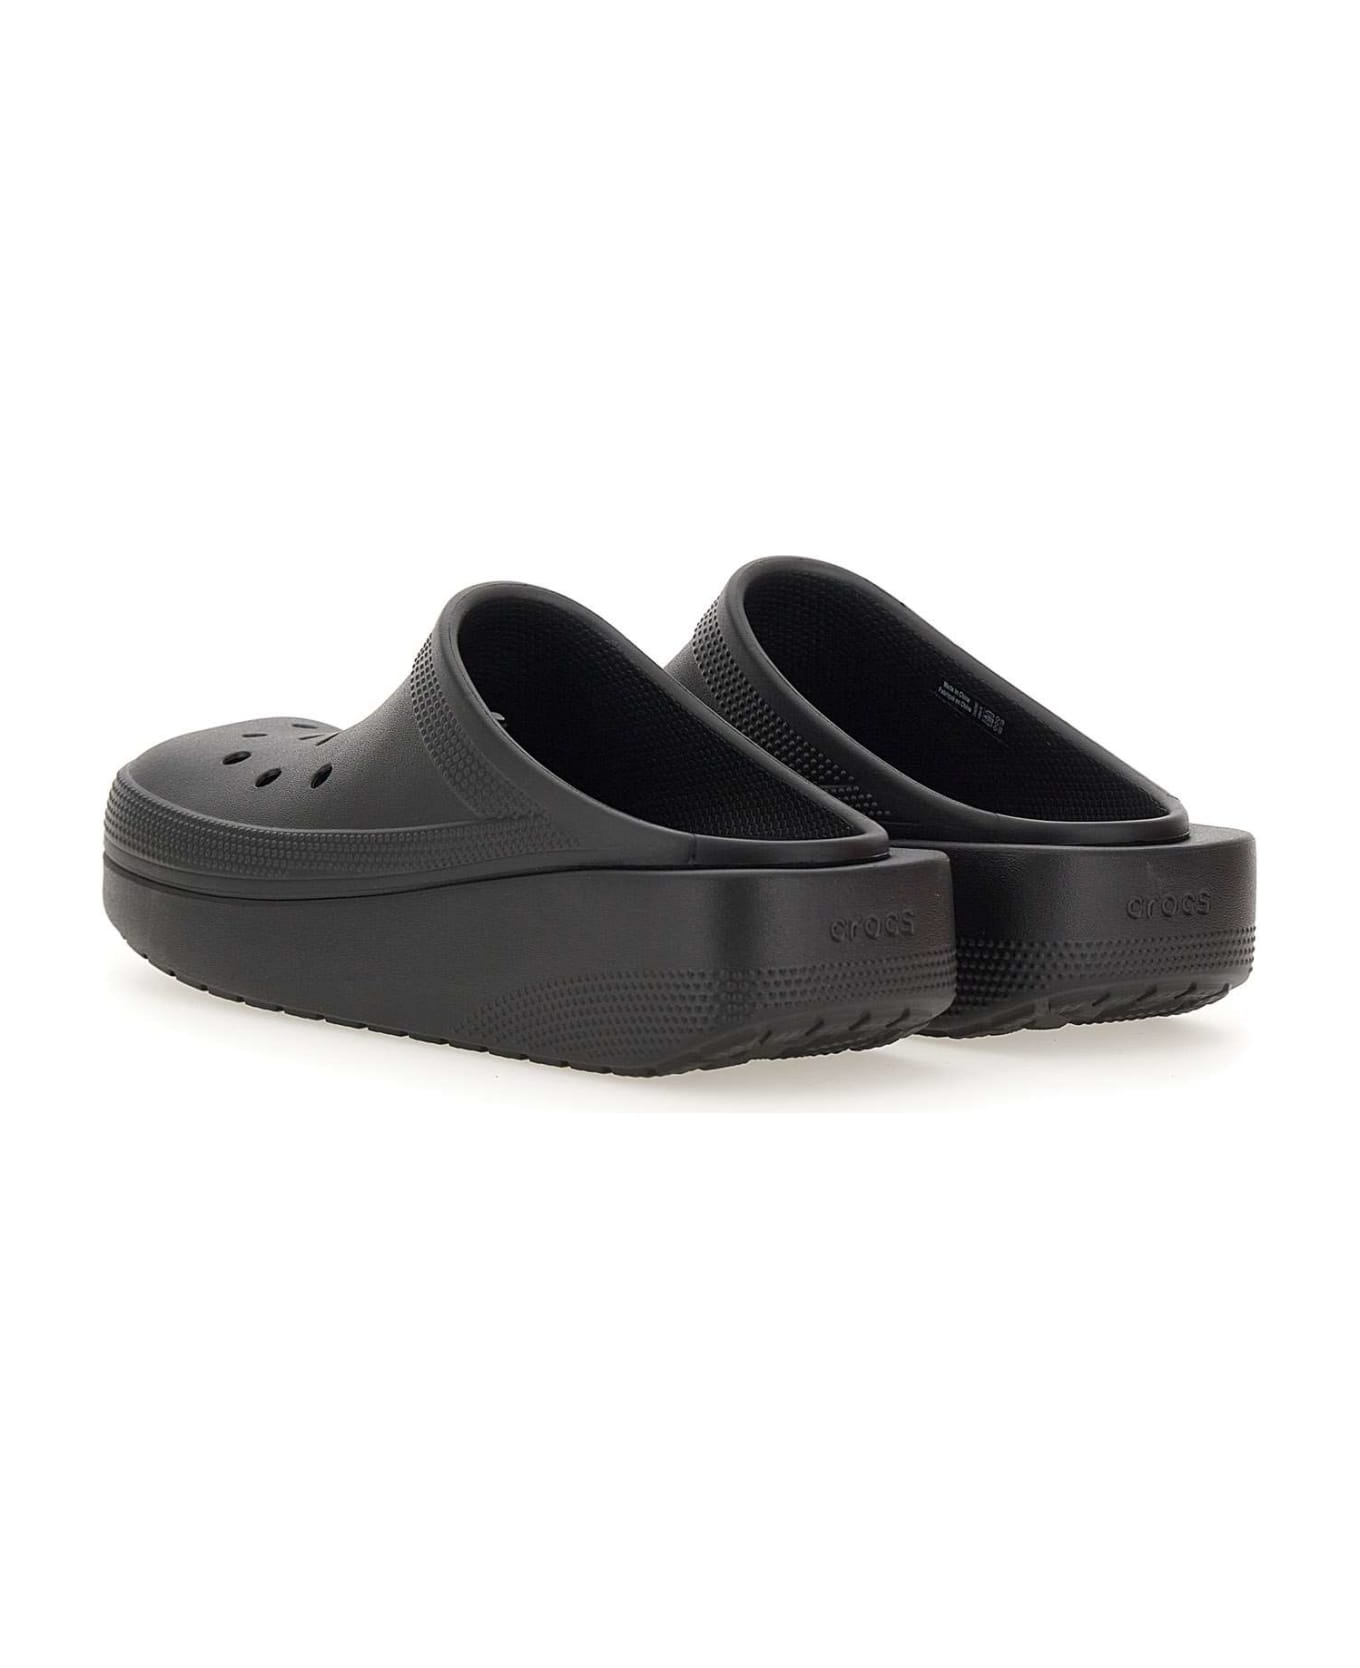 Crocs 'classic Blunt Toe' Slippers - Black フラットシューズ